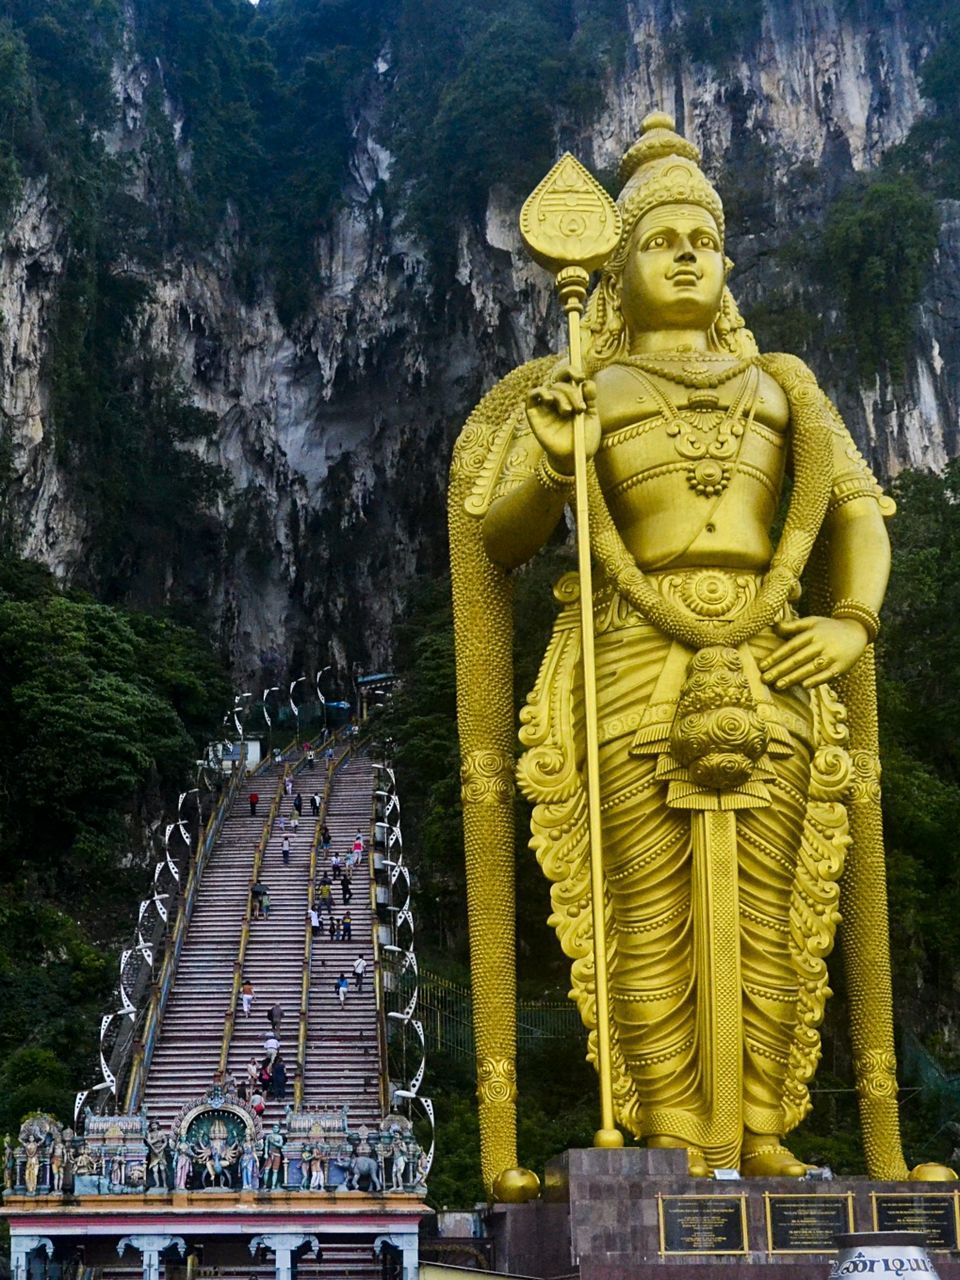 Low angle view of lord murugan statue at batu caves